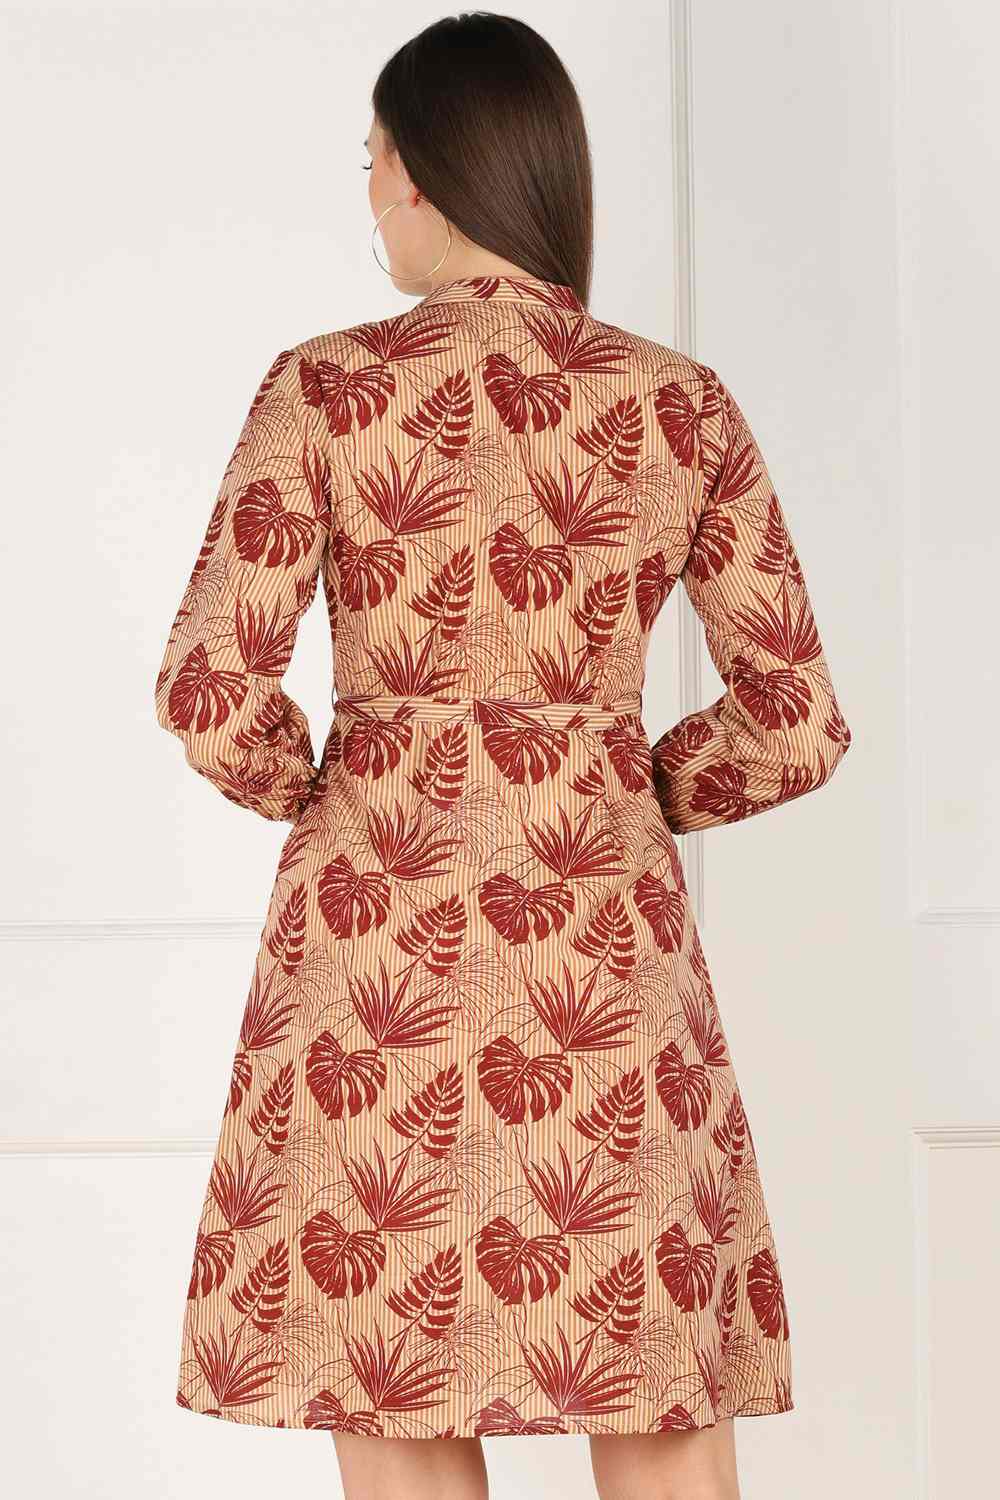 Buy Paisley Print Dress Online